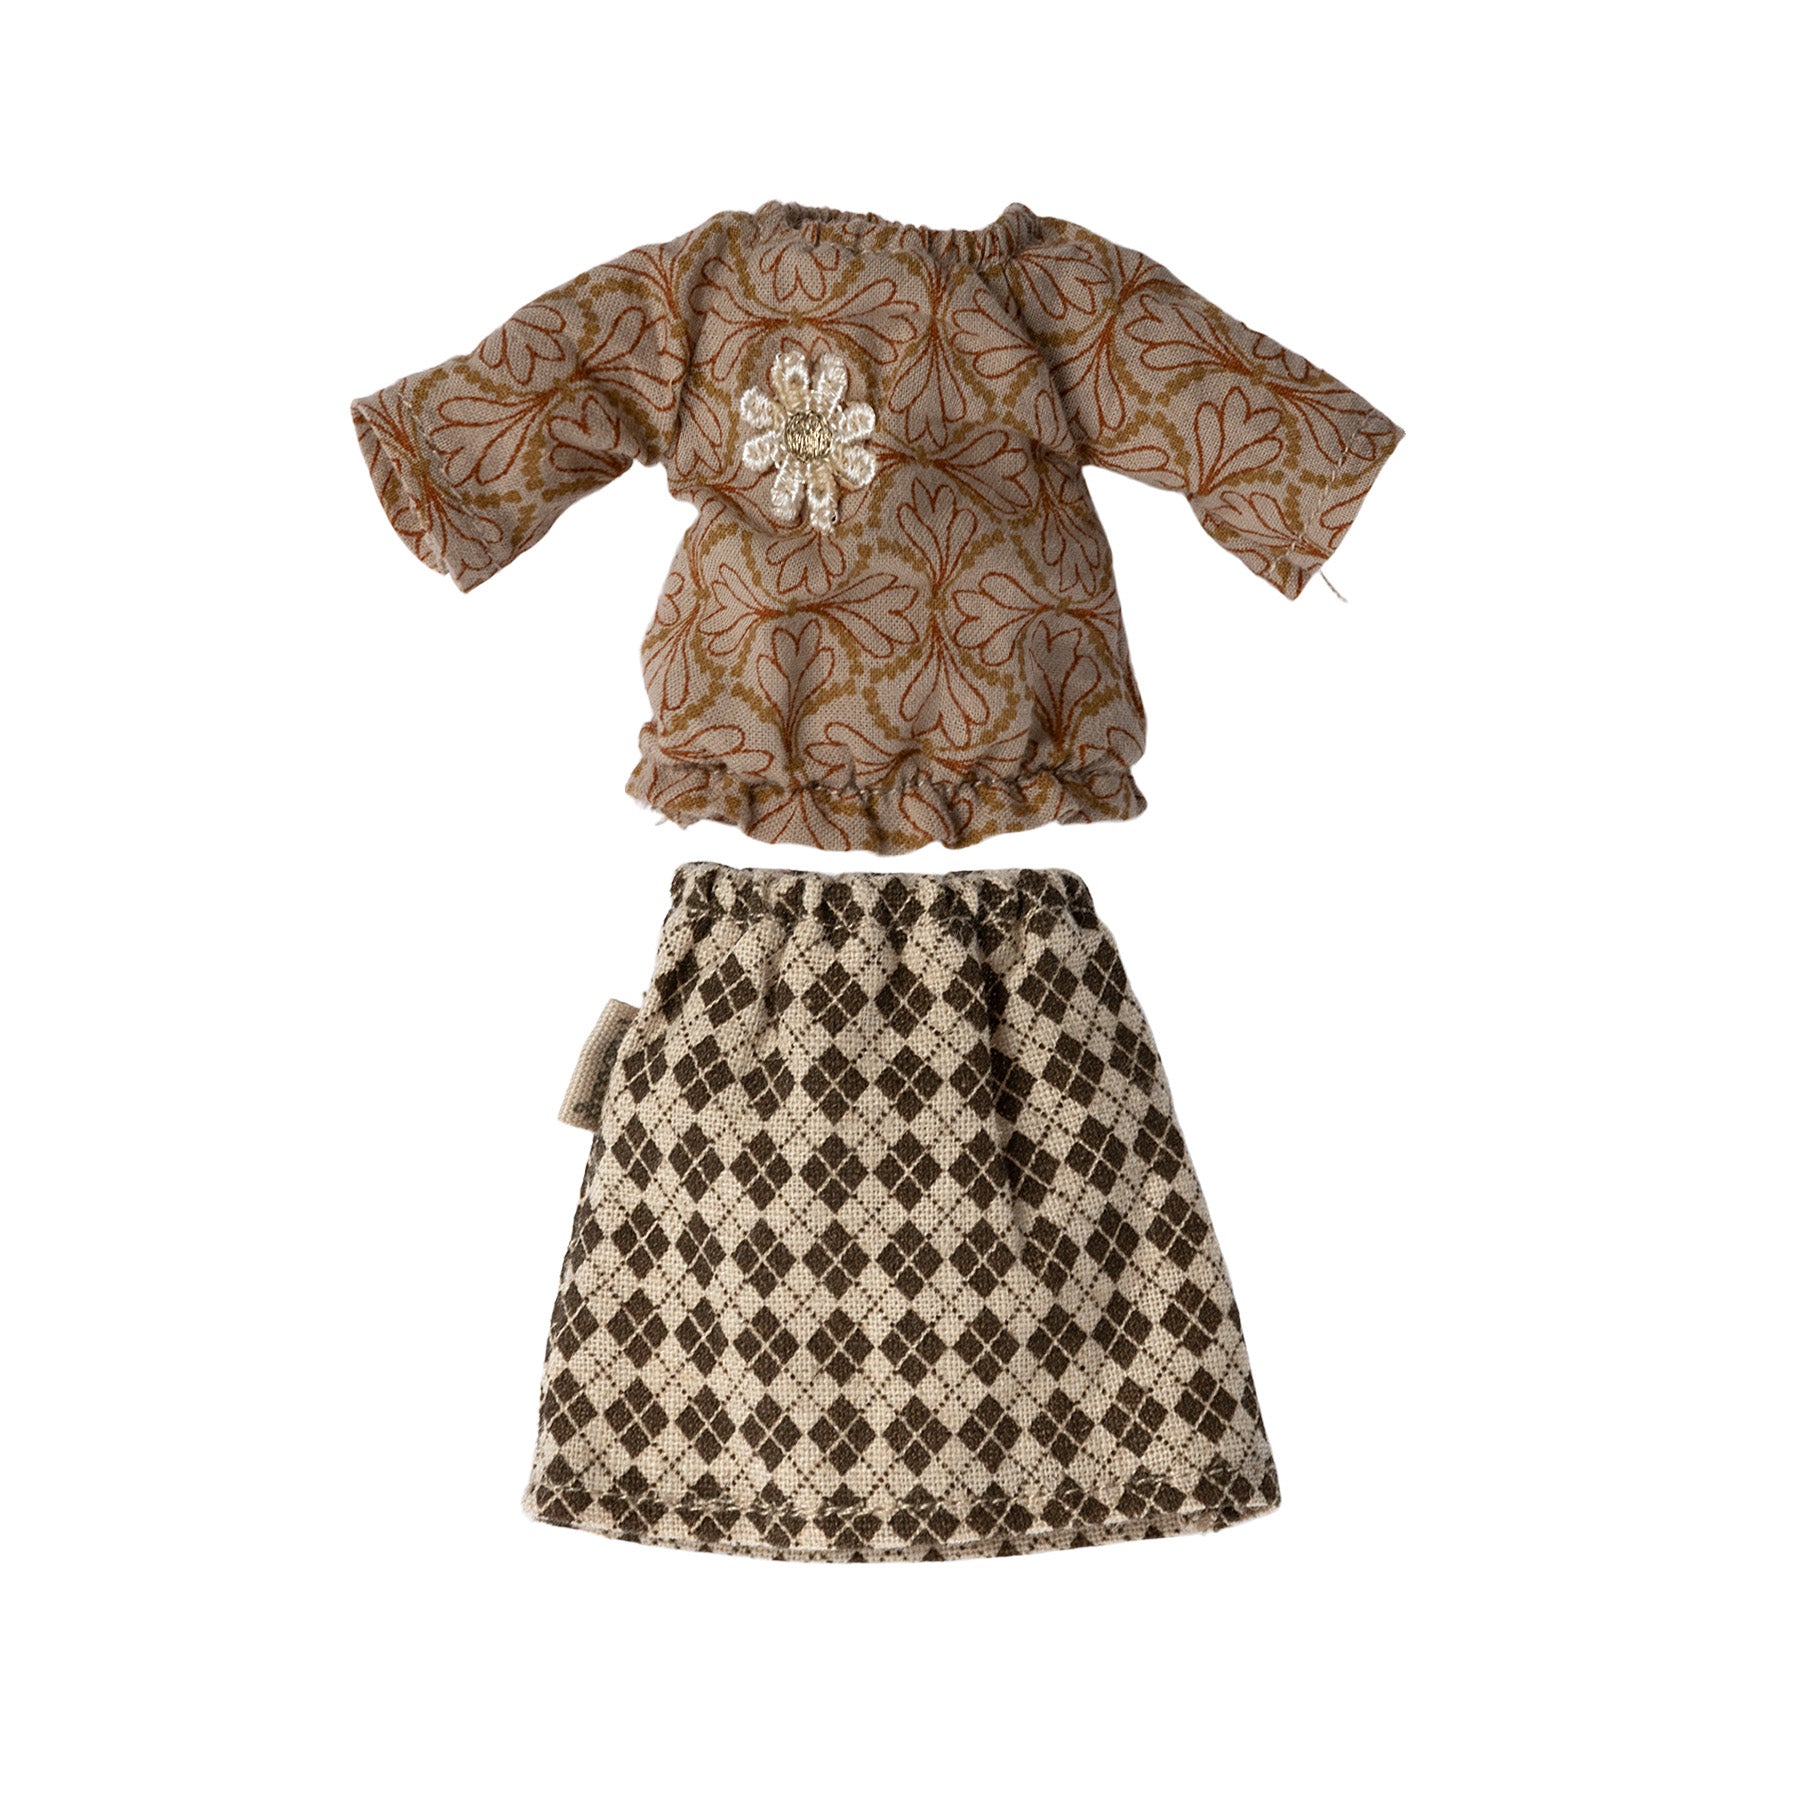 Maileg Grandma Mouse Clothes - Blouse & Skirt